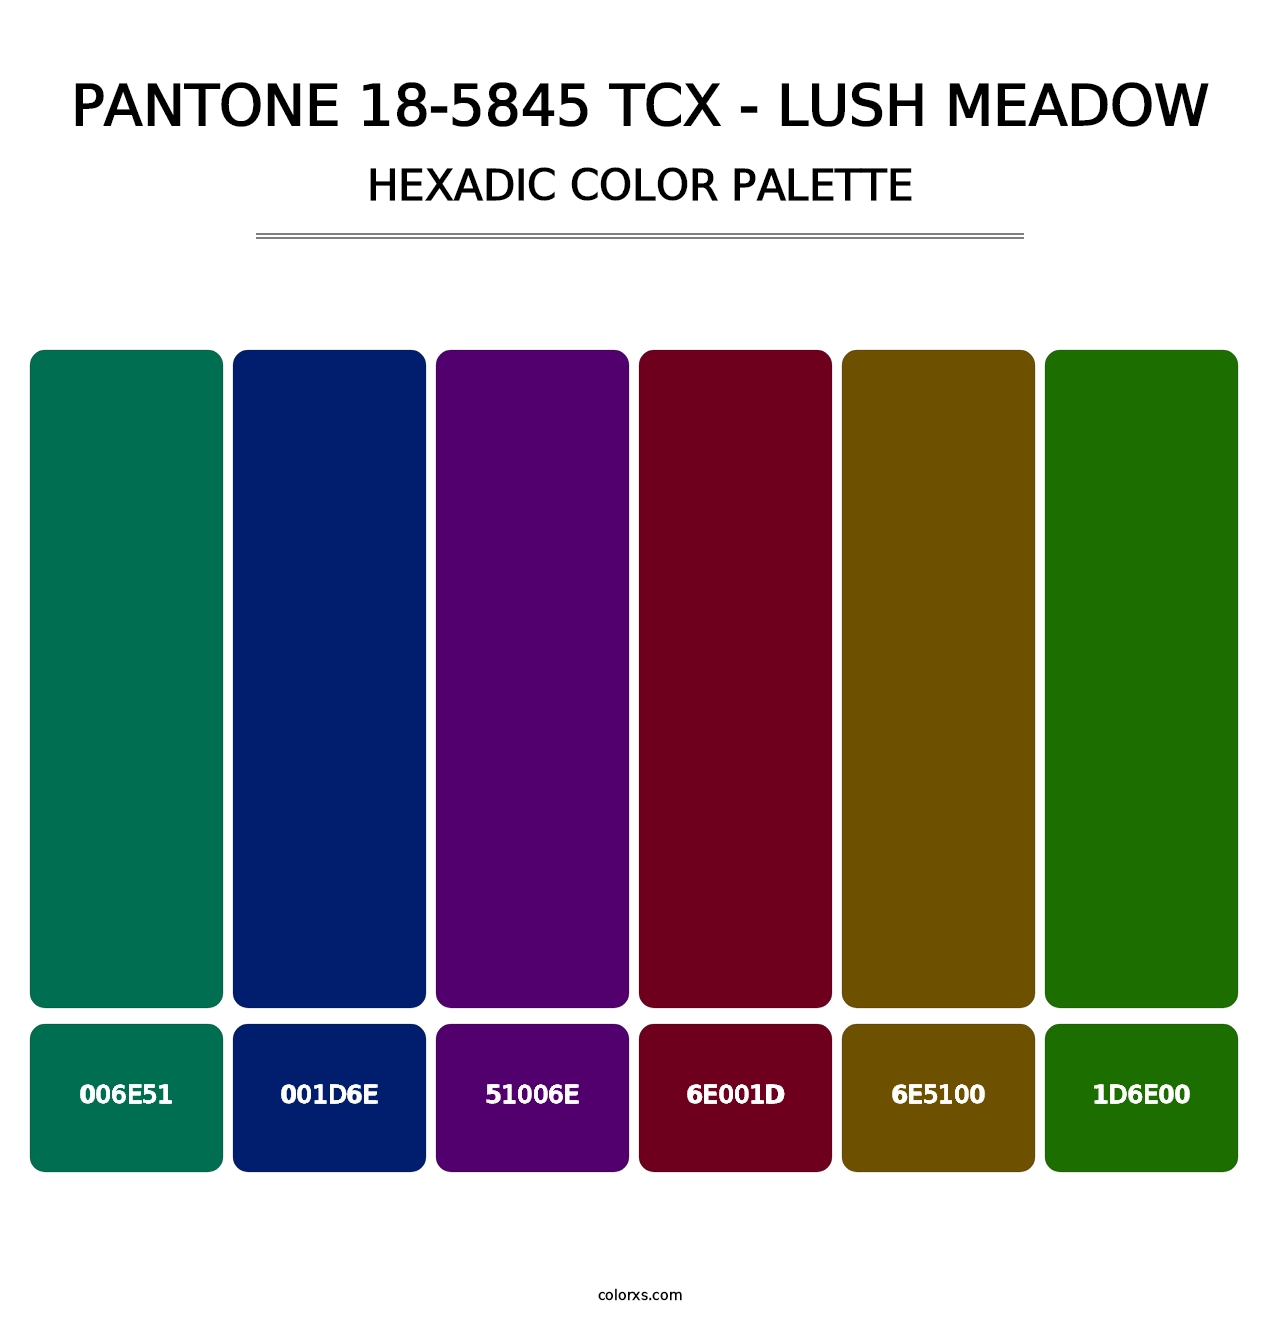 PANTONE 18-5845 TCX - Lush Meadow - Hexadic Color Palette